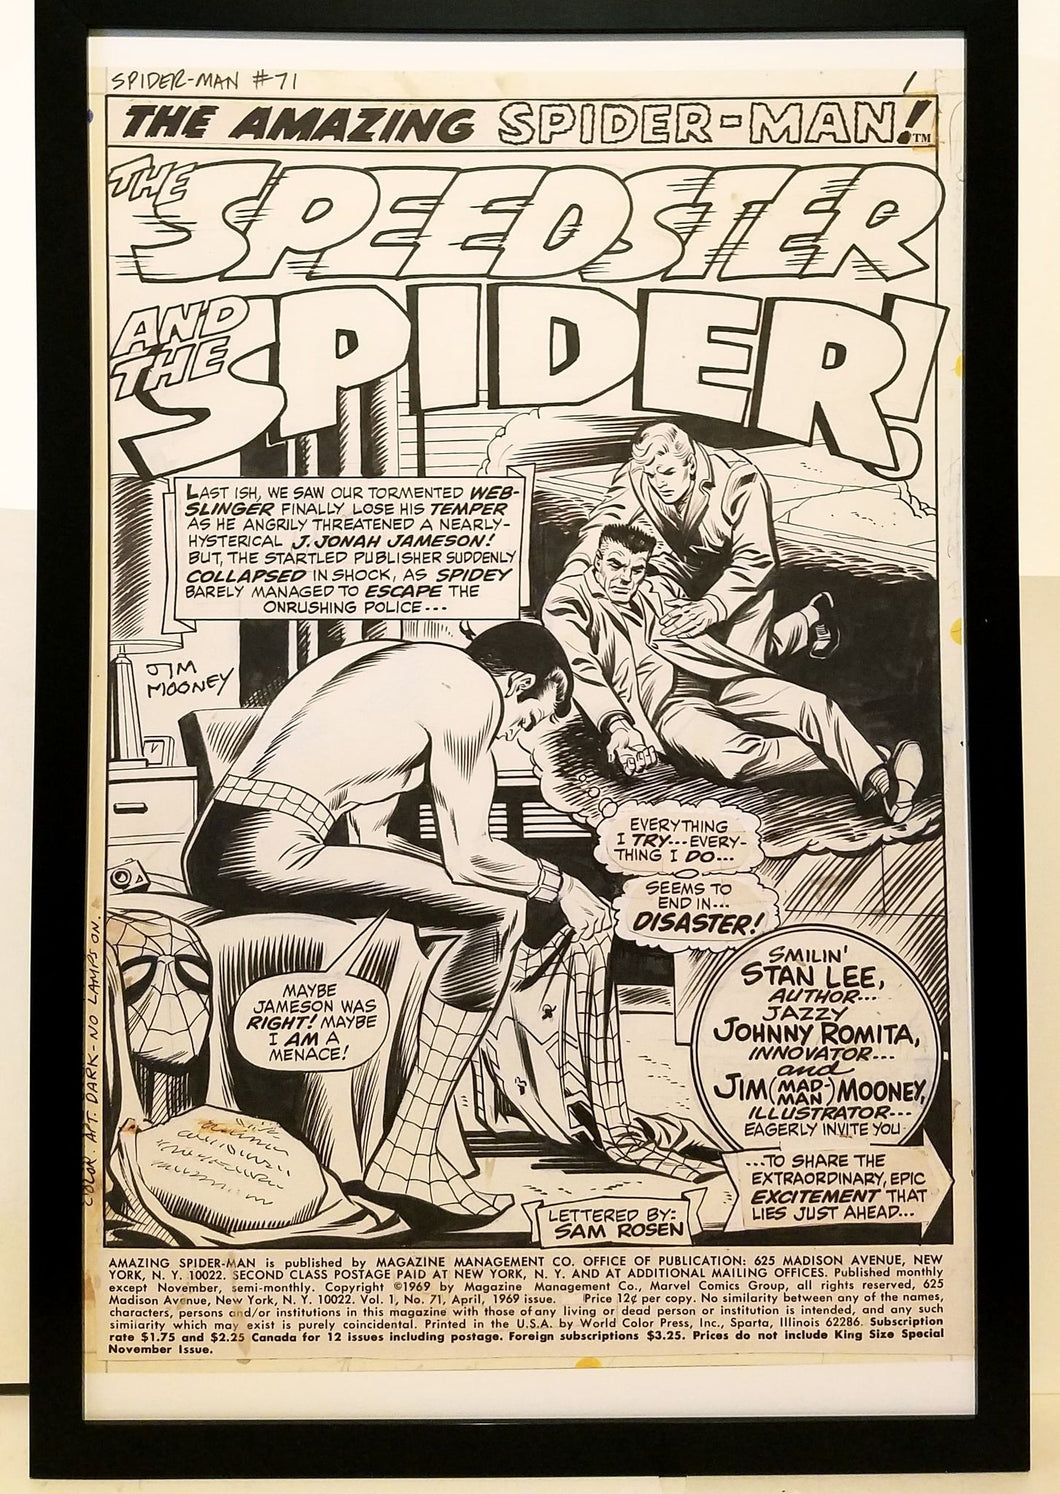 Amazing Spider-Man #71 pg. 1 John Romita 11x17 FRAMED Original Art Poster Marvel Comics